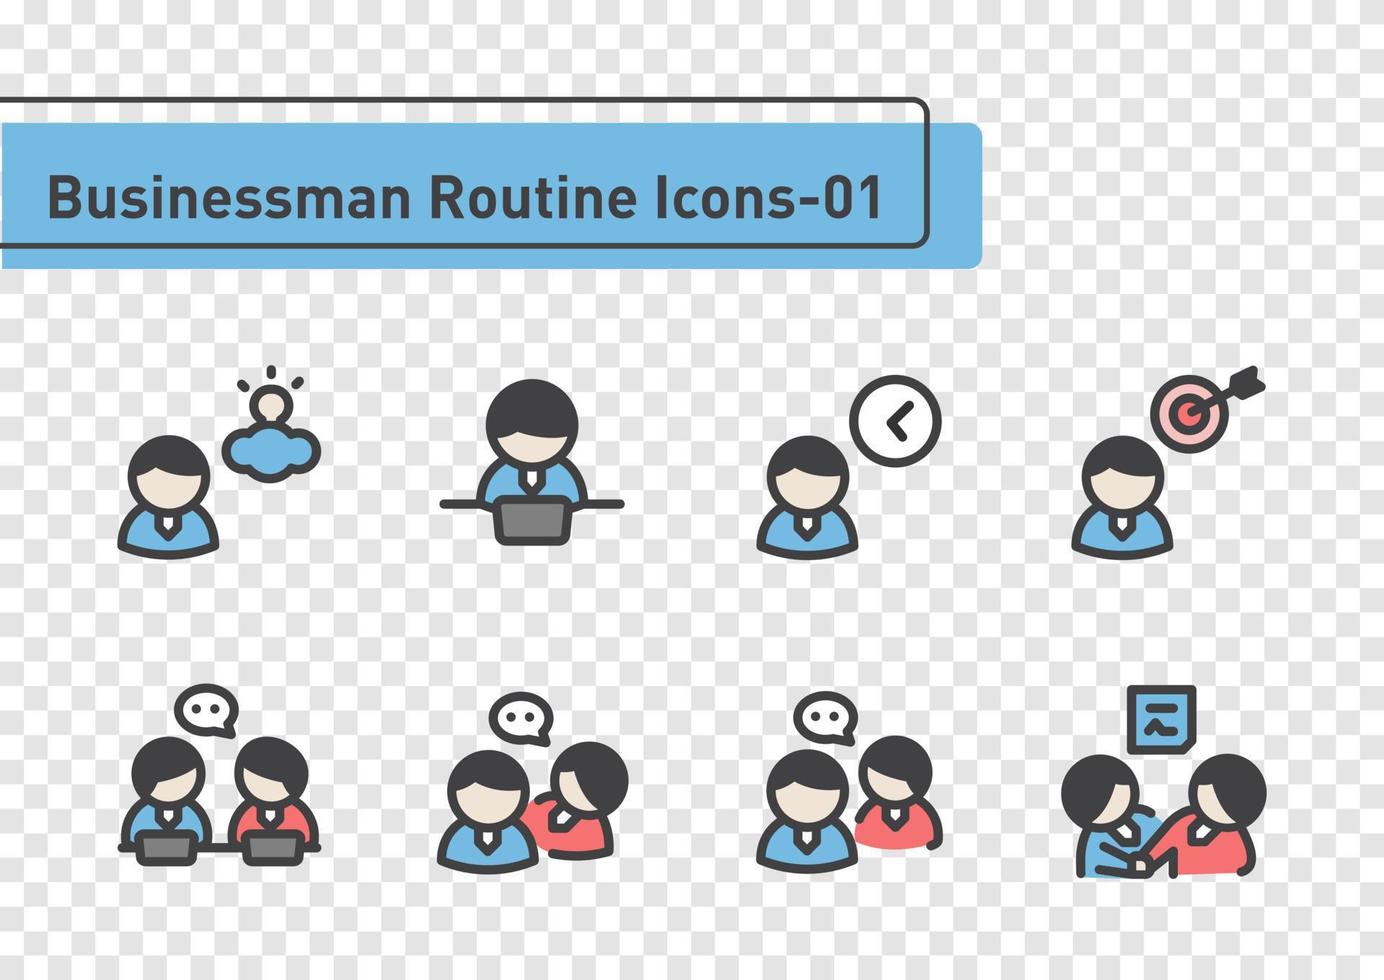 Businessman routine icon set on plane background vector